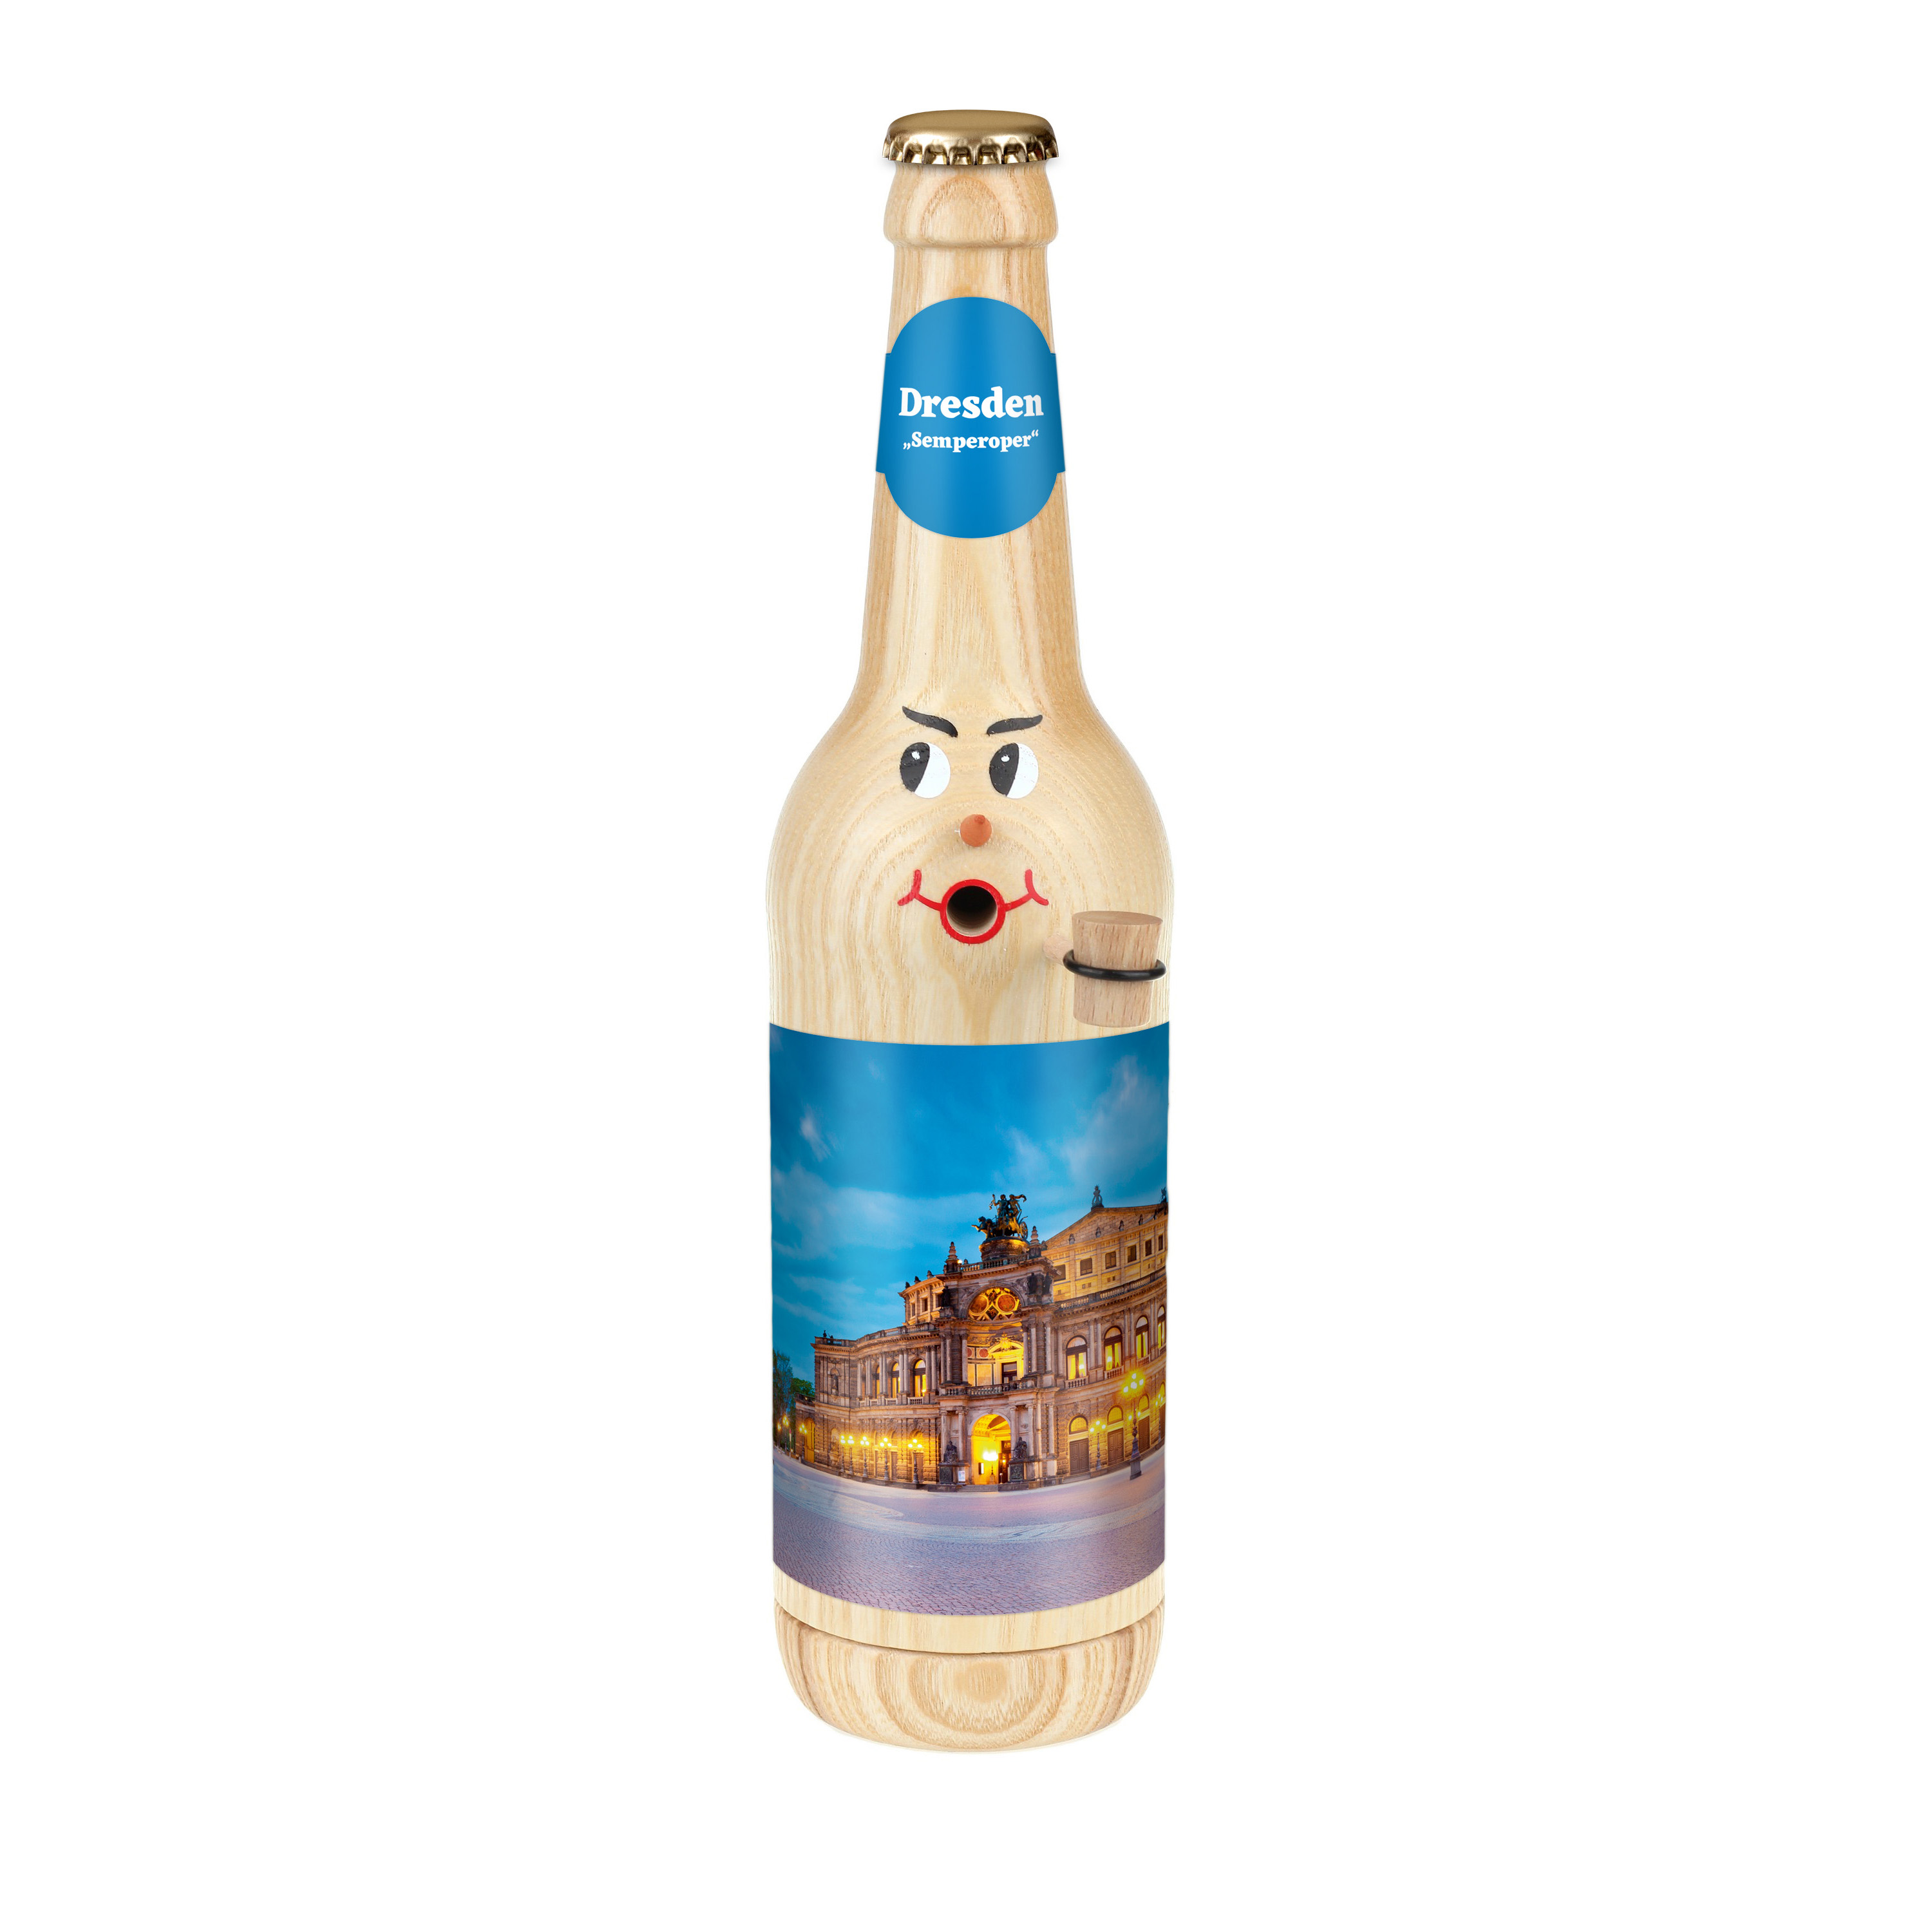 Räucherflasche Bier Longneck 0,5 natur - "Dresden Semperoper"